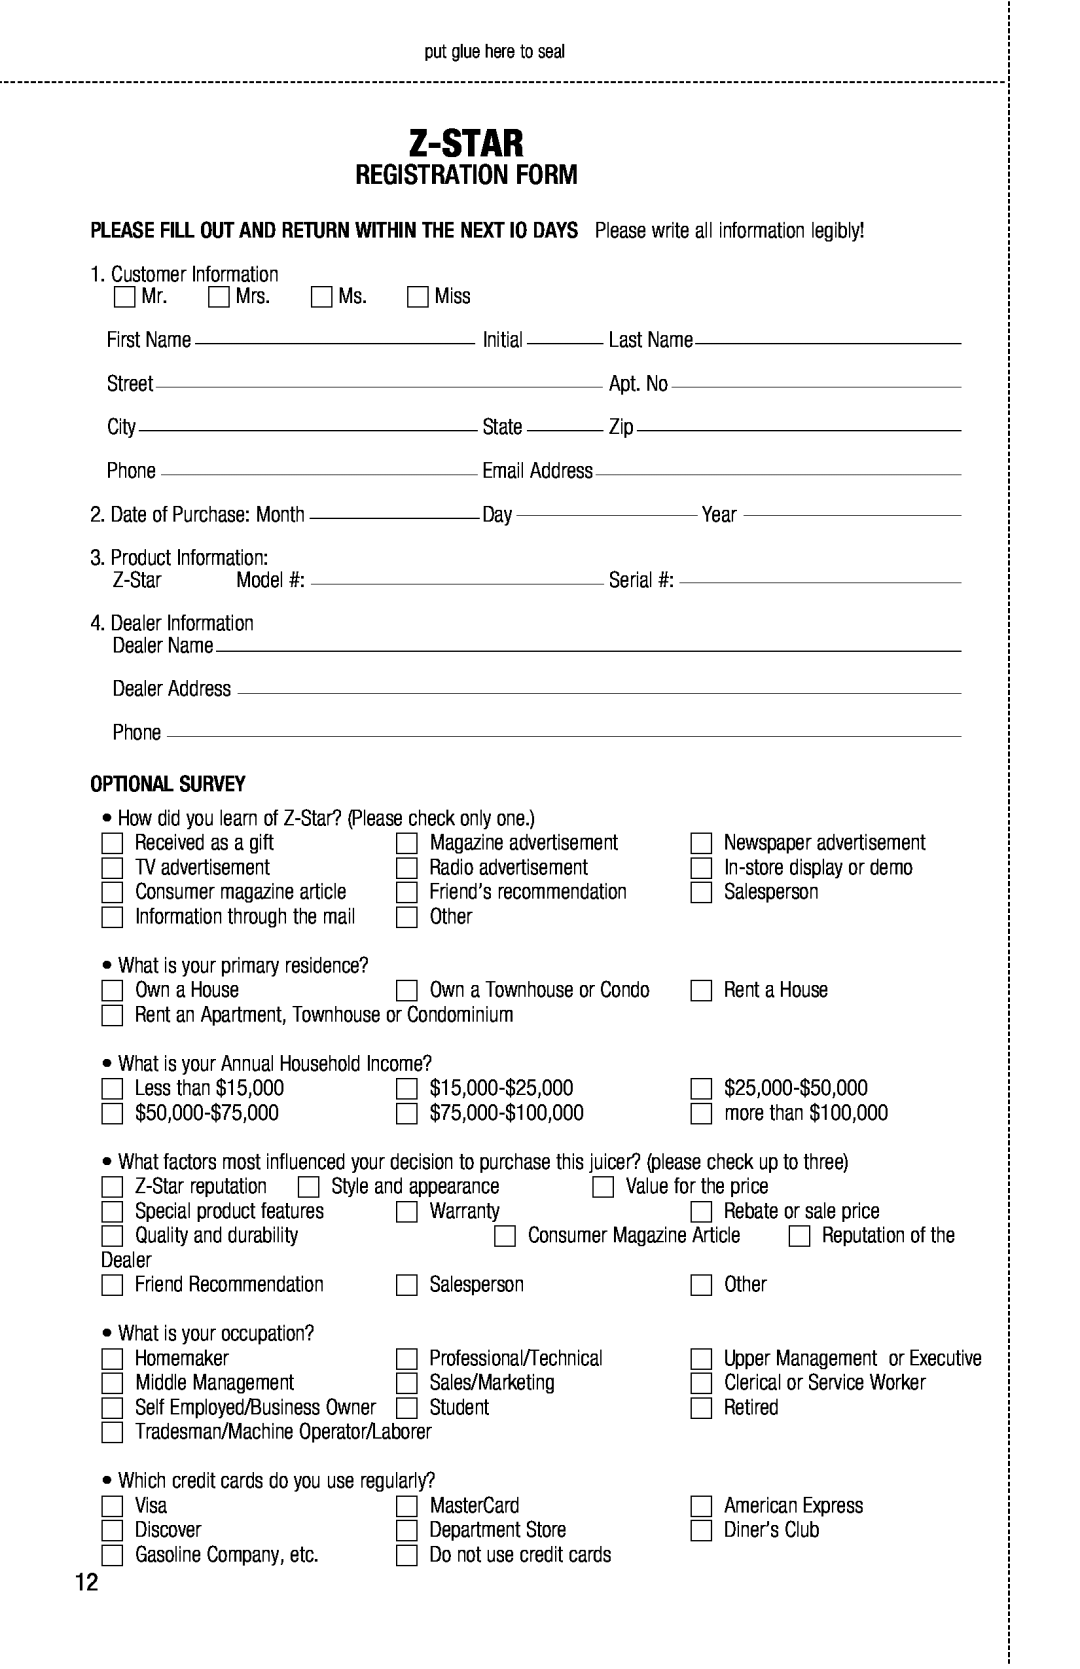 Tribest Z-610 instruction manual Z-Star, Registration Form 